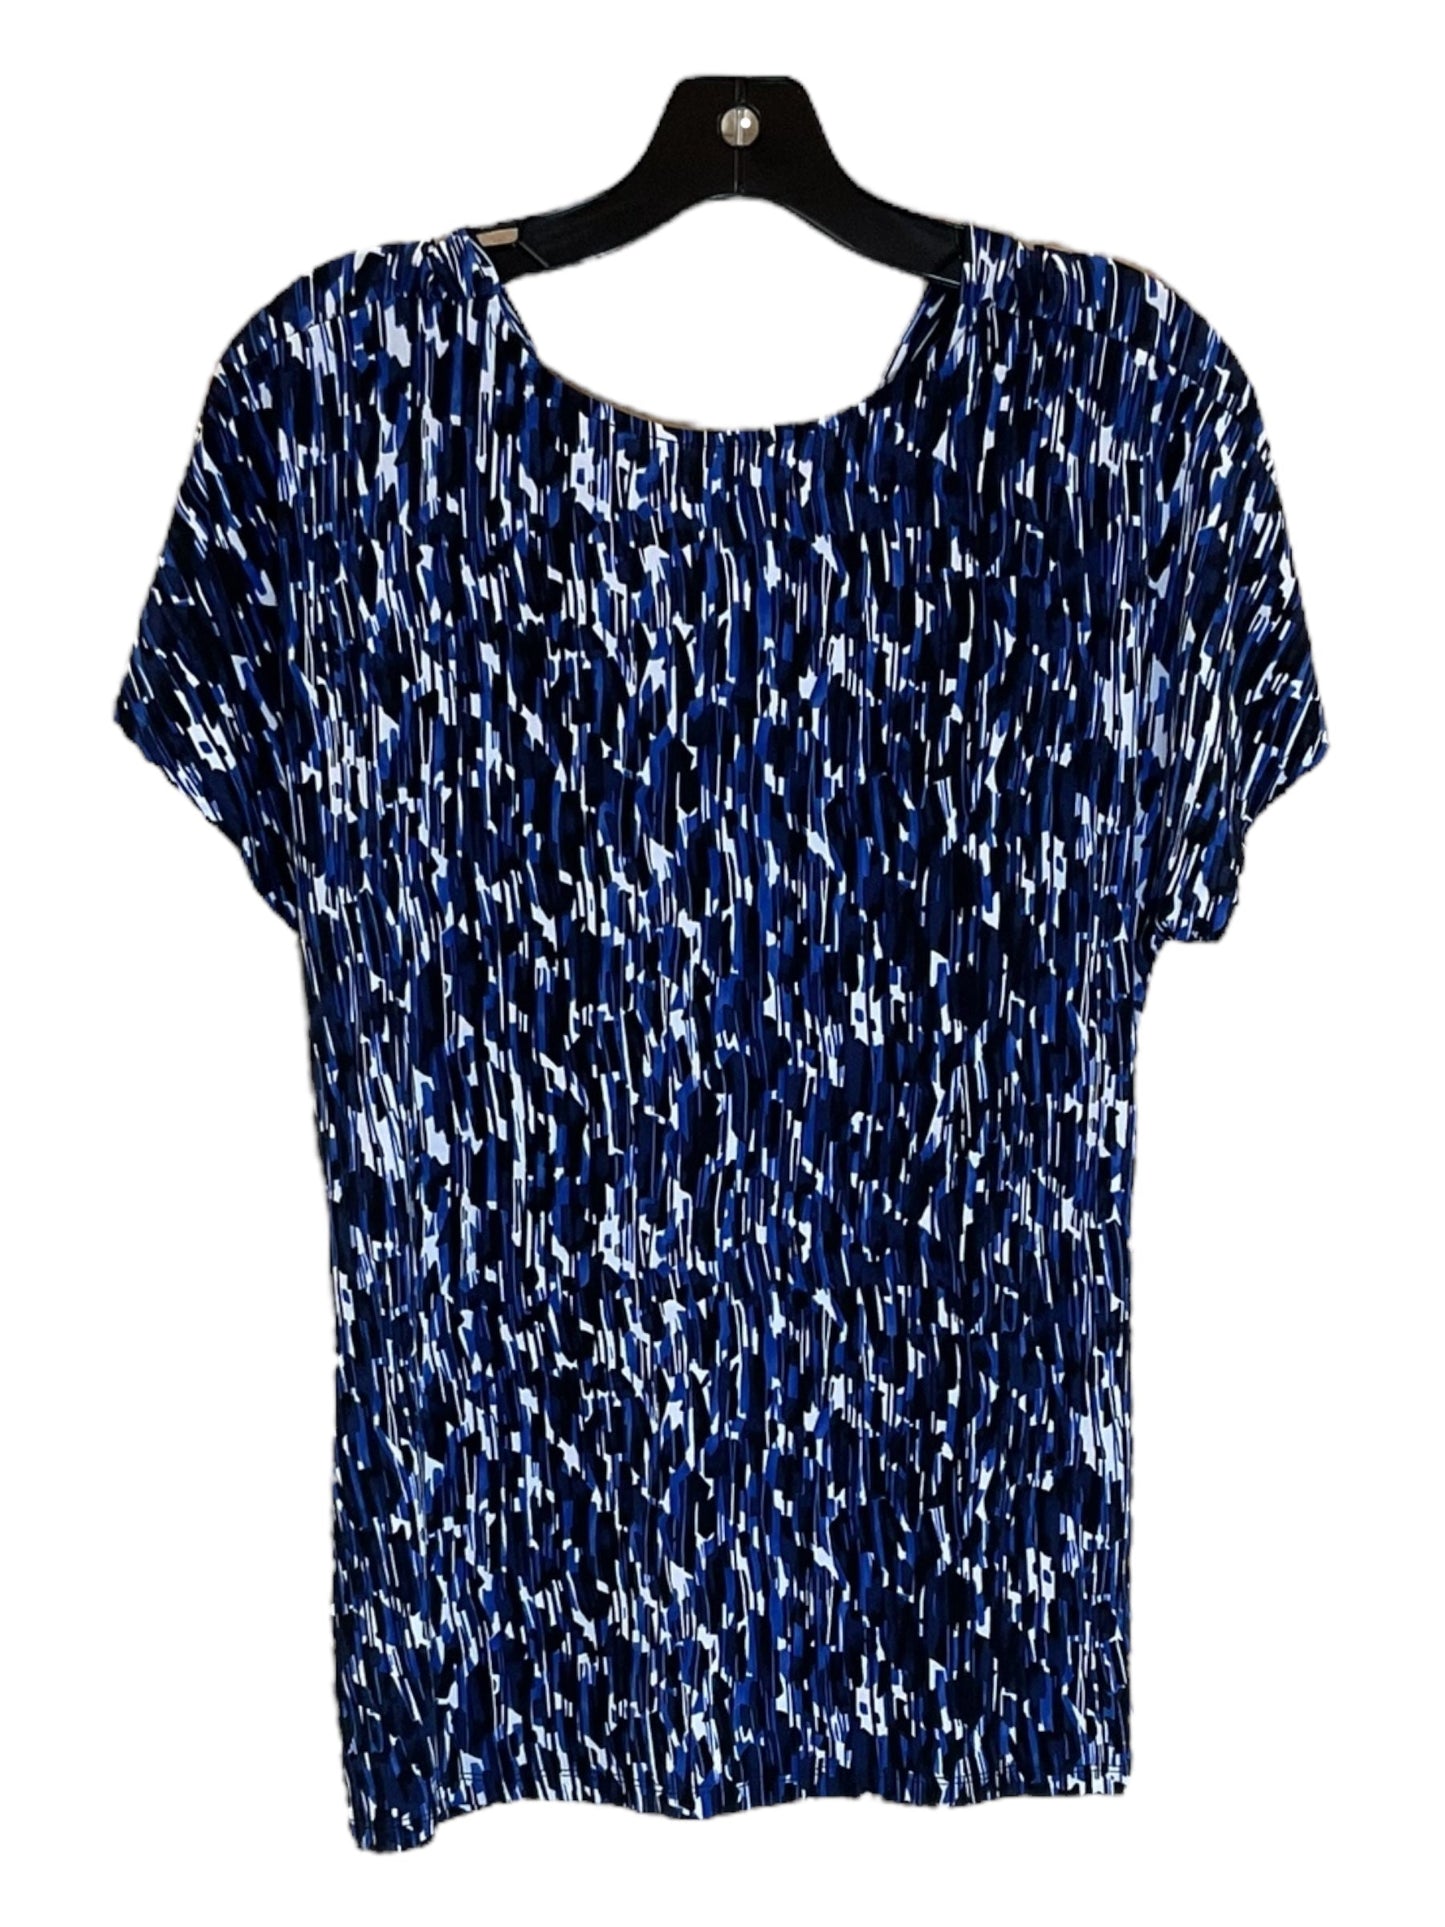 Black & Blue Top Short Sleeve Clothes Mentor, Size Xl